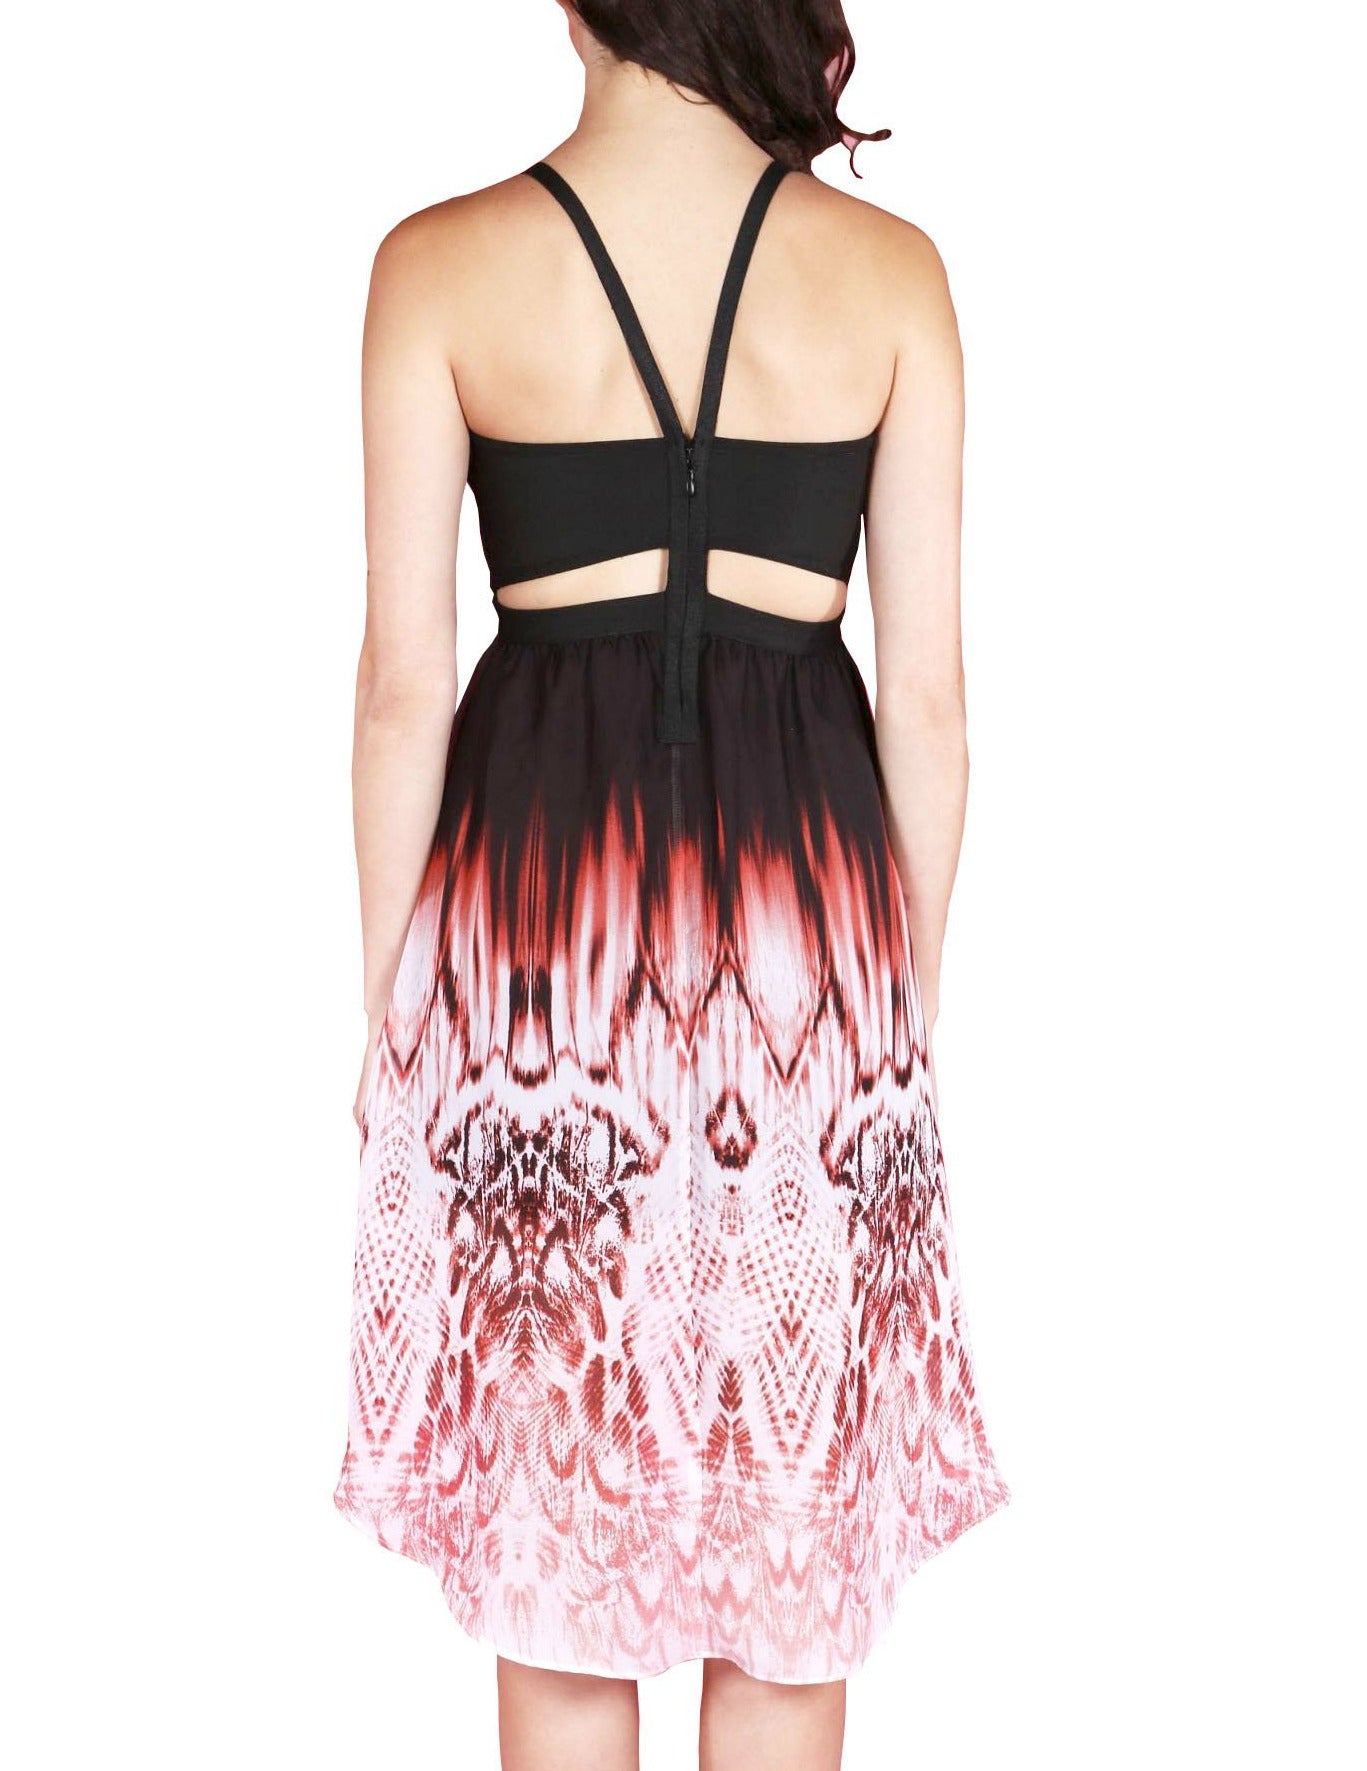 Coral Reef Y-Strap Tie Dye Dress (6586856833067)